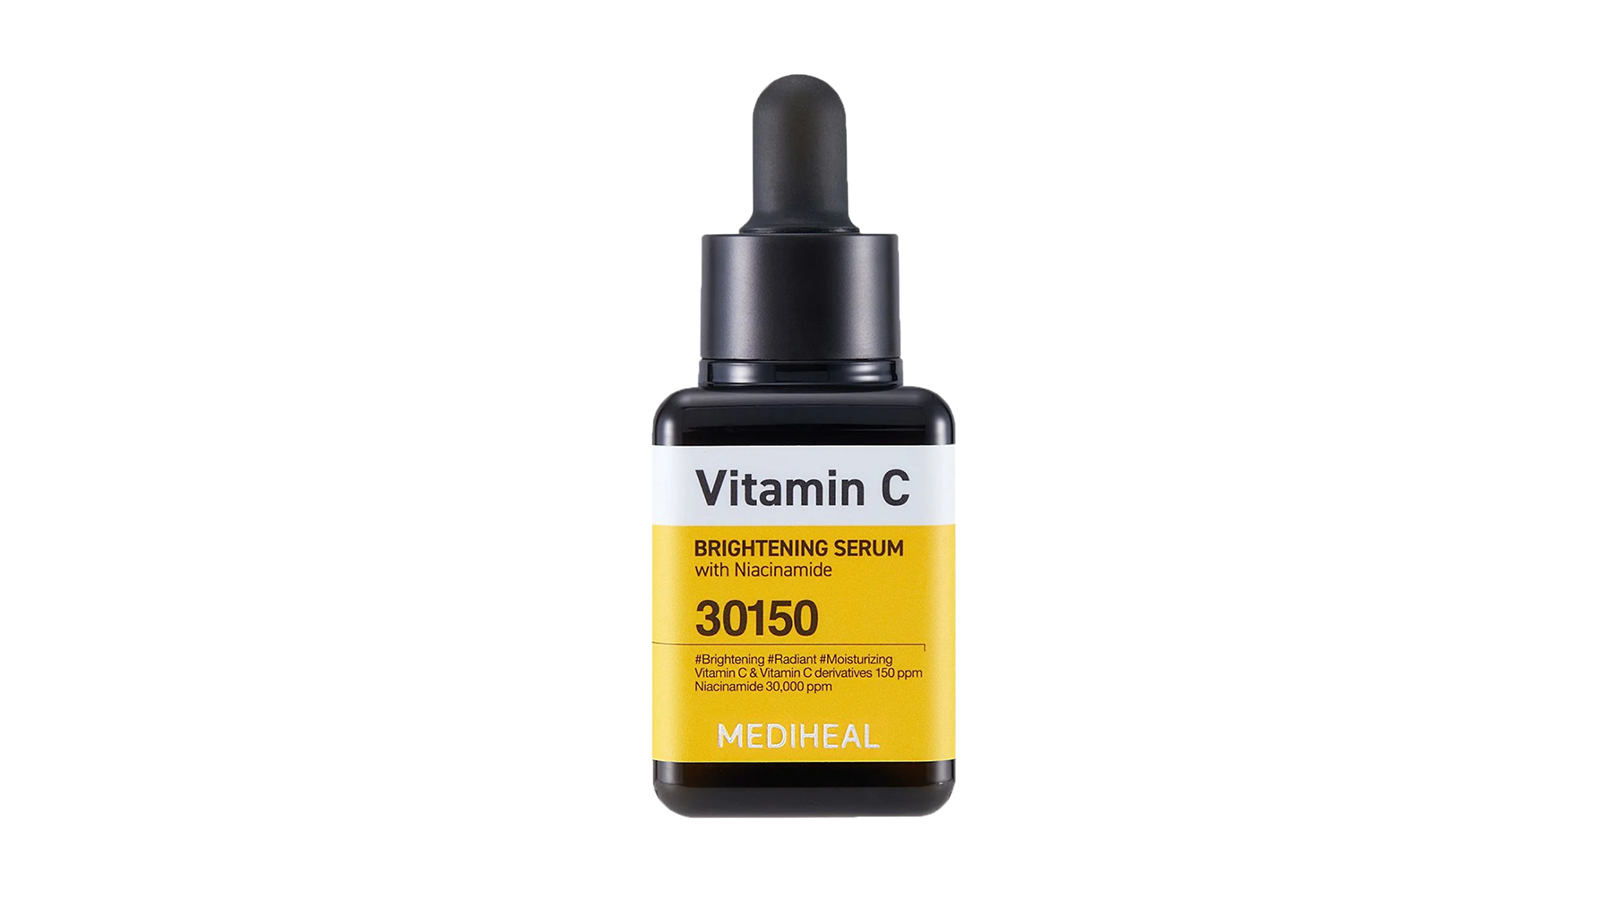 MEDIHEAL Vitamin C Brightening Serum